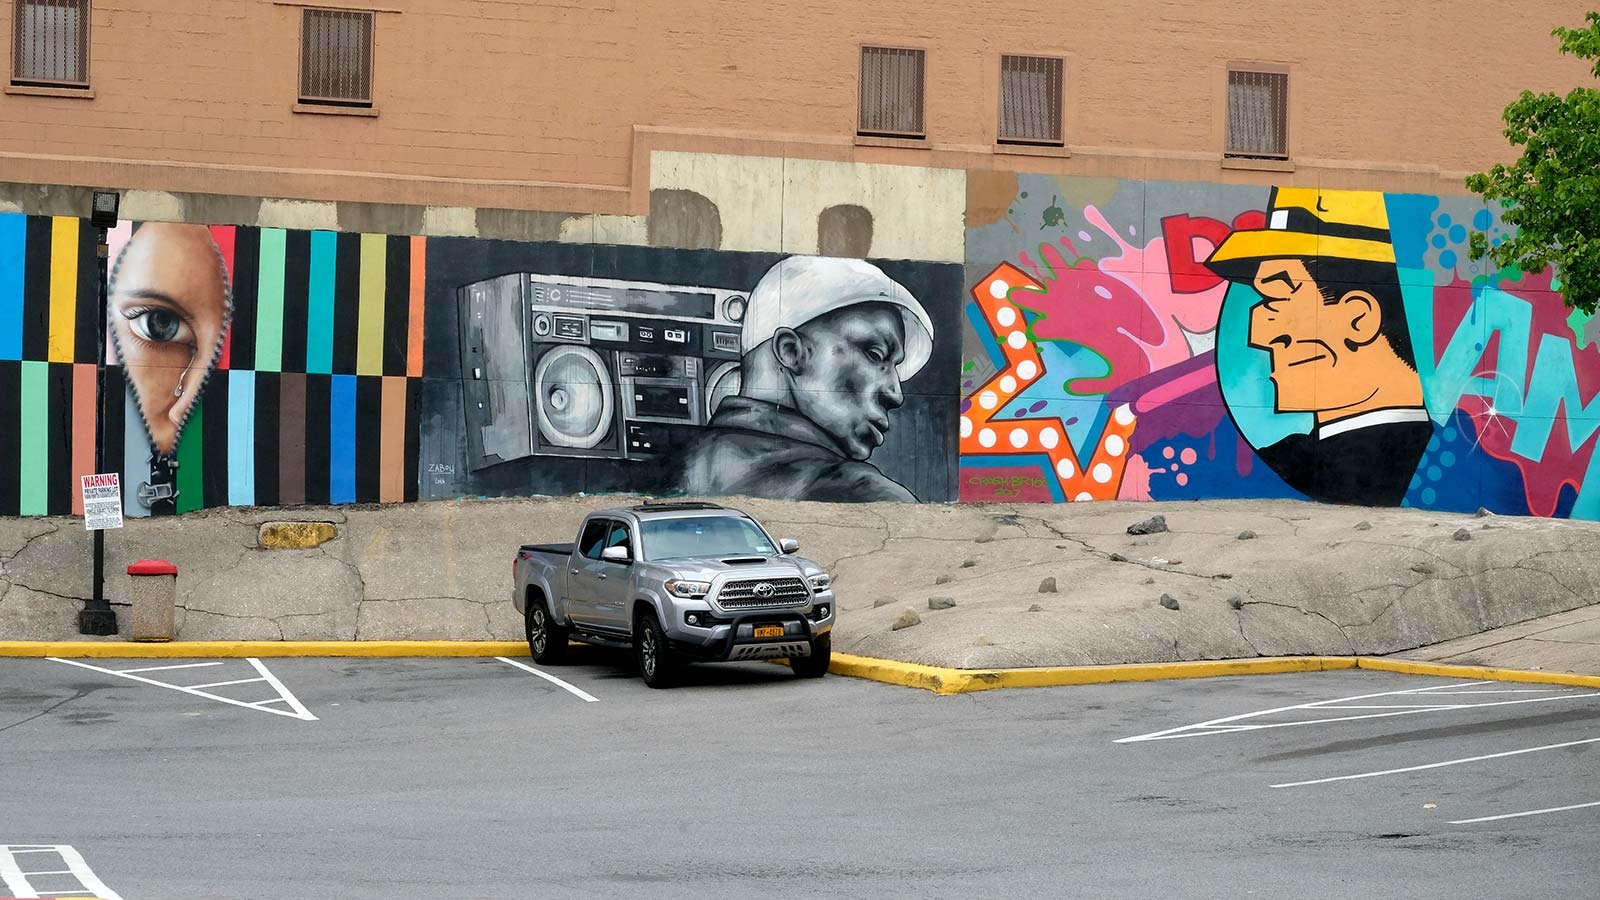 Image from Graffiti Art - South Bronx - NY